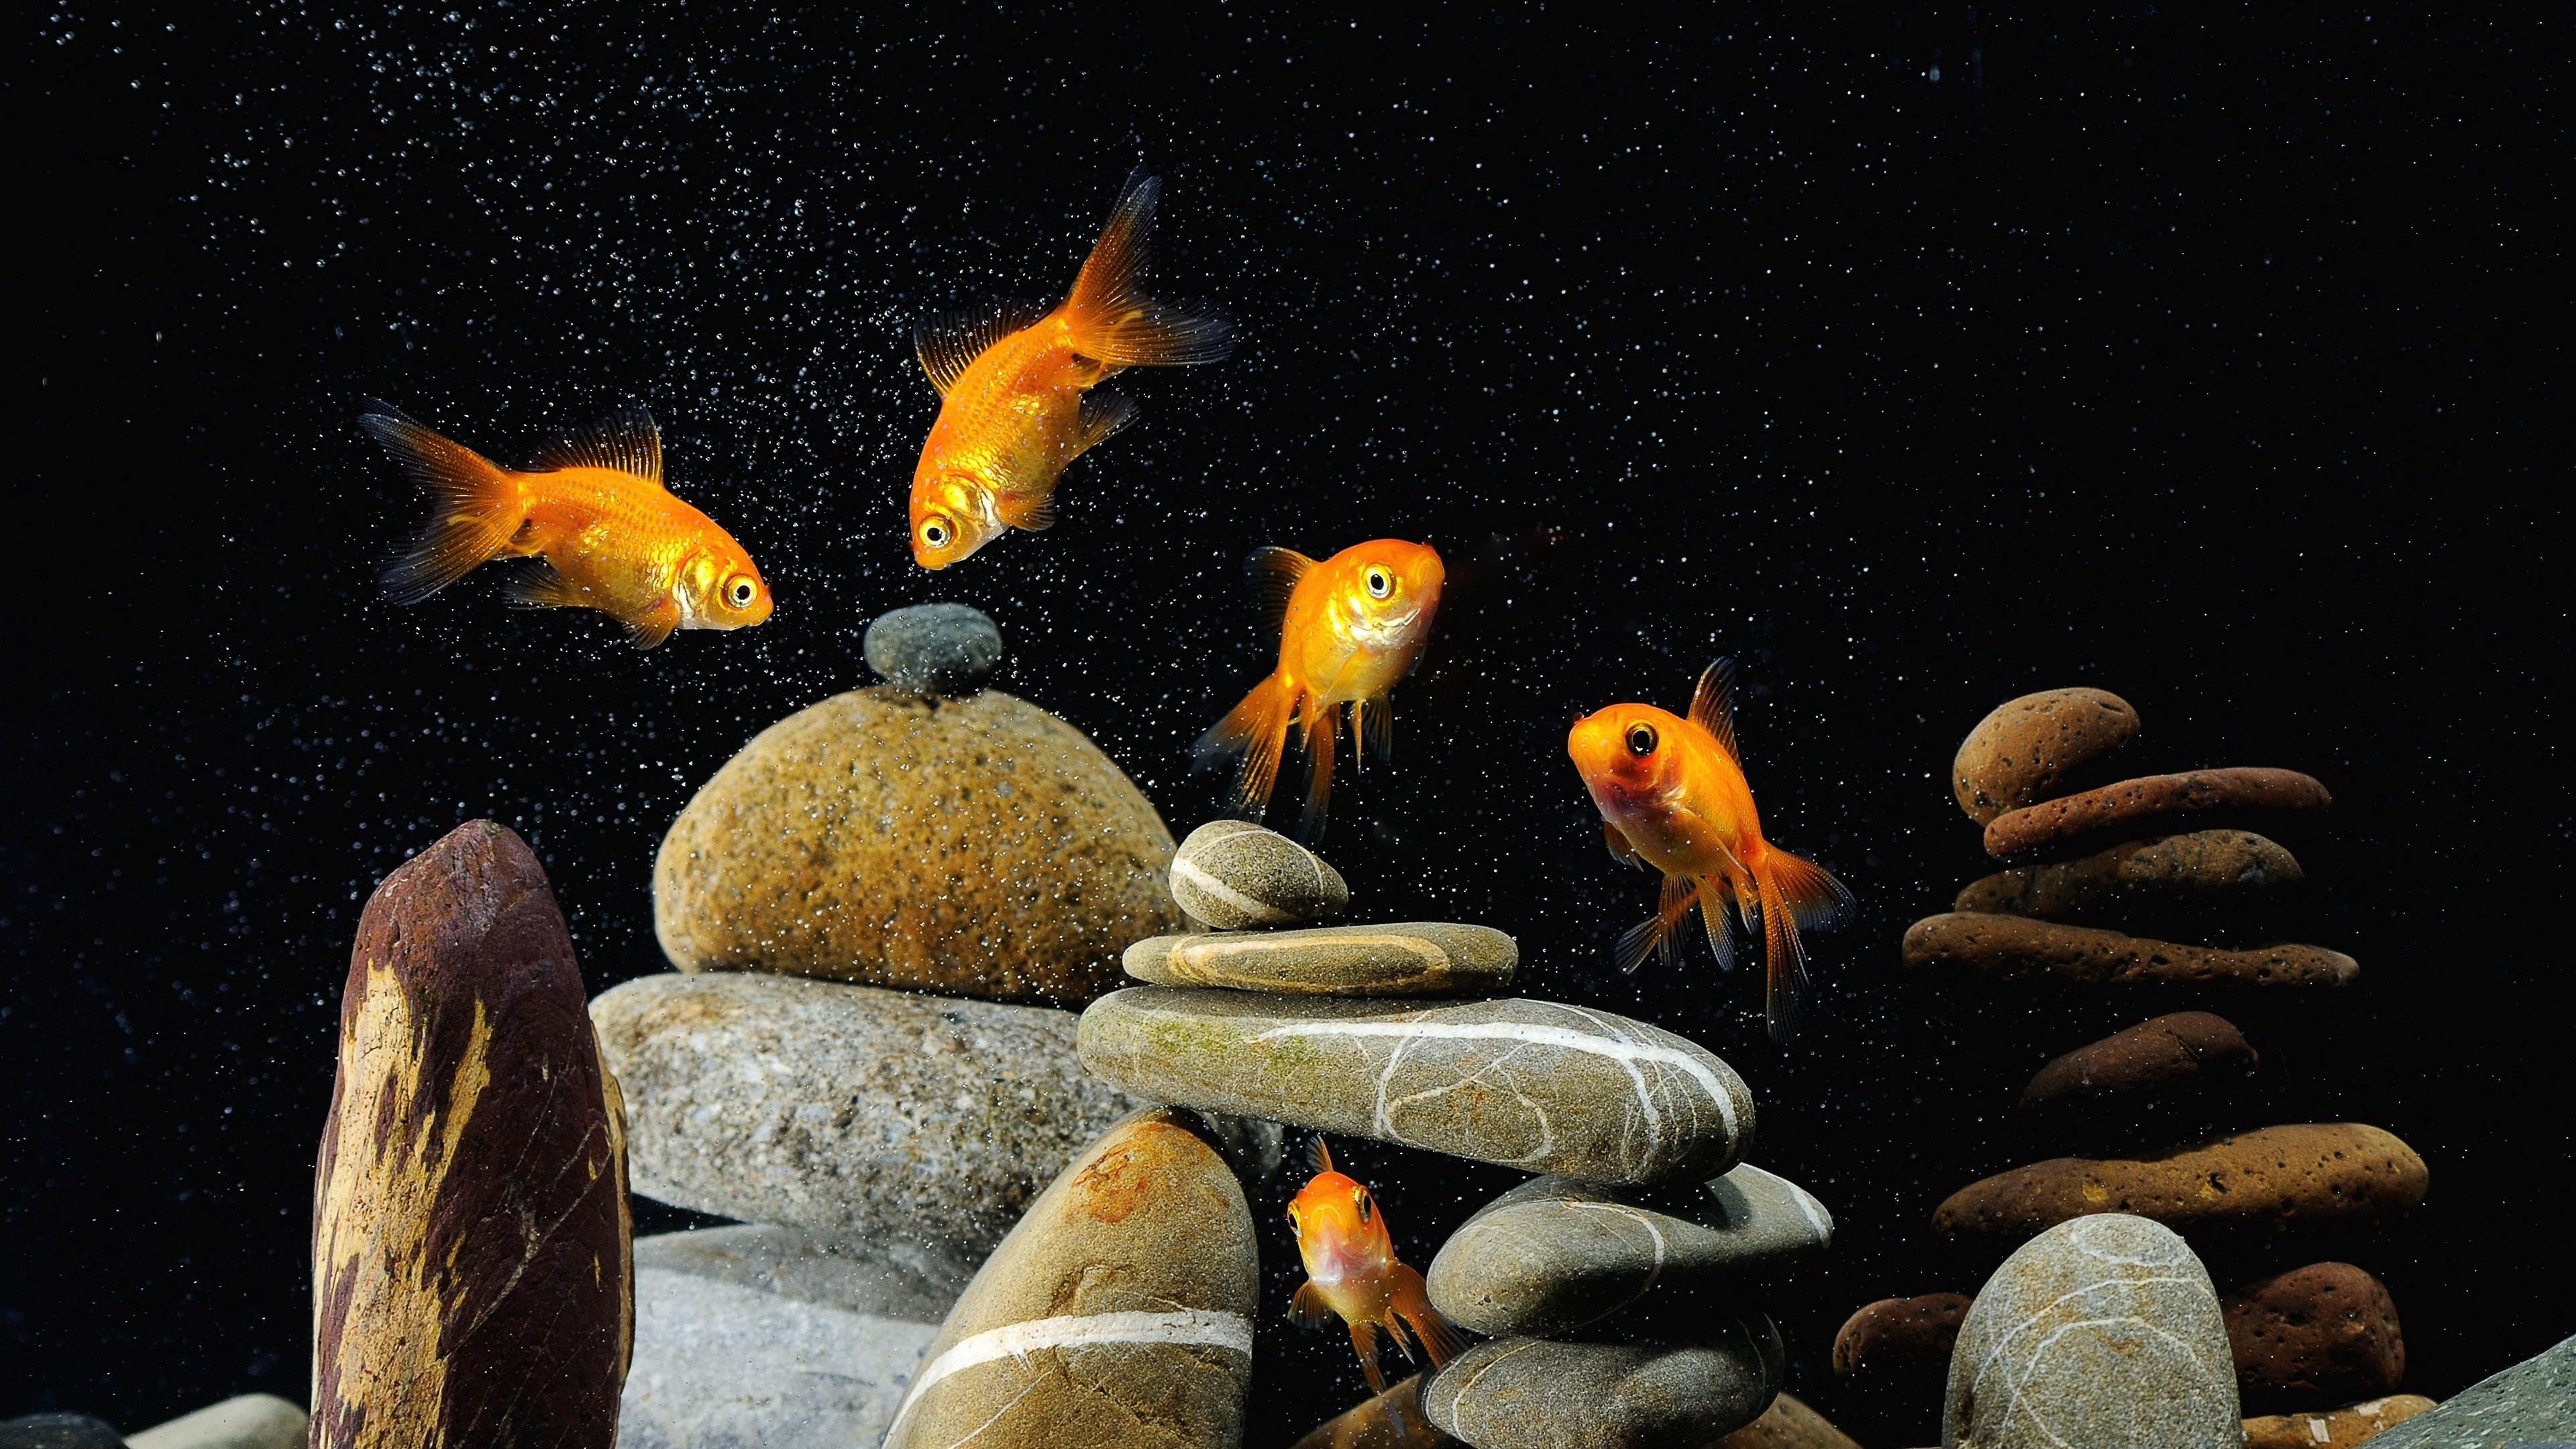 Download wallpaper 3840x2160 fish, aquarium, rocks, black background